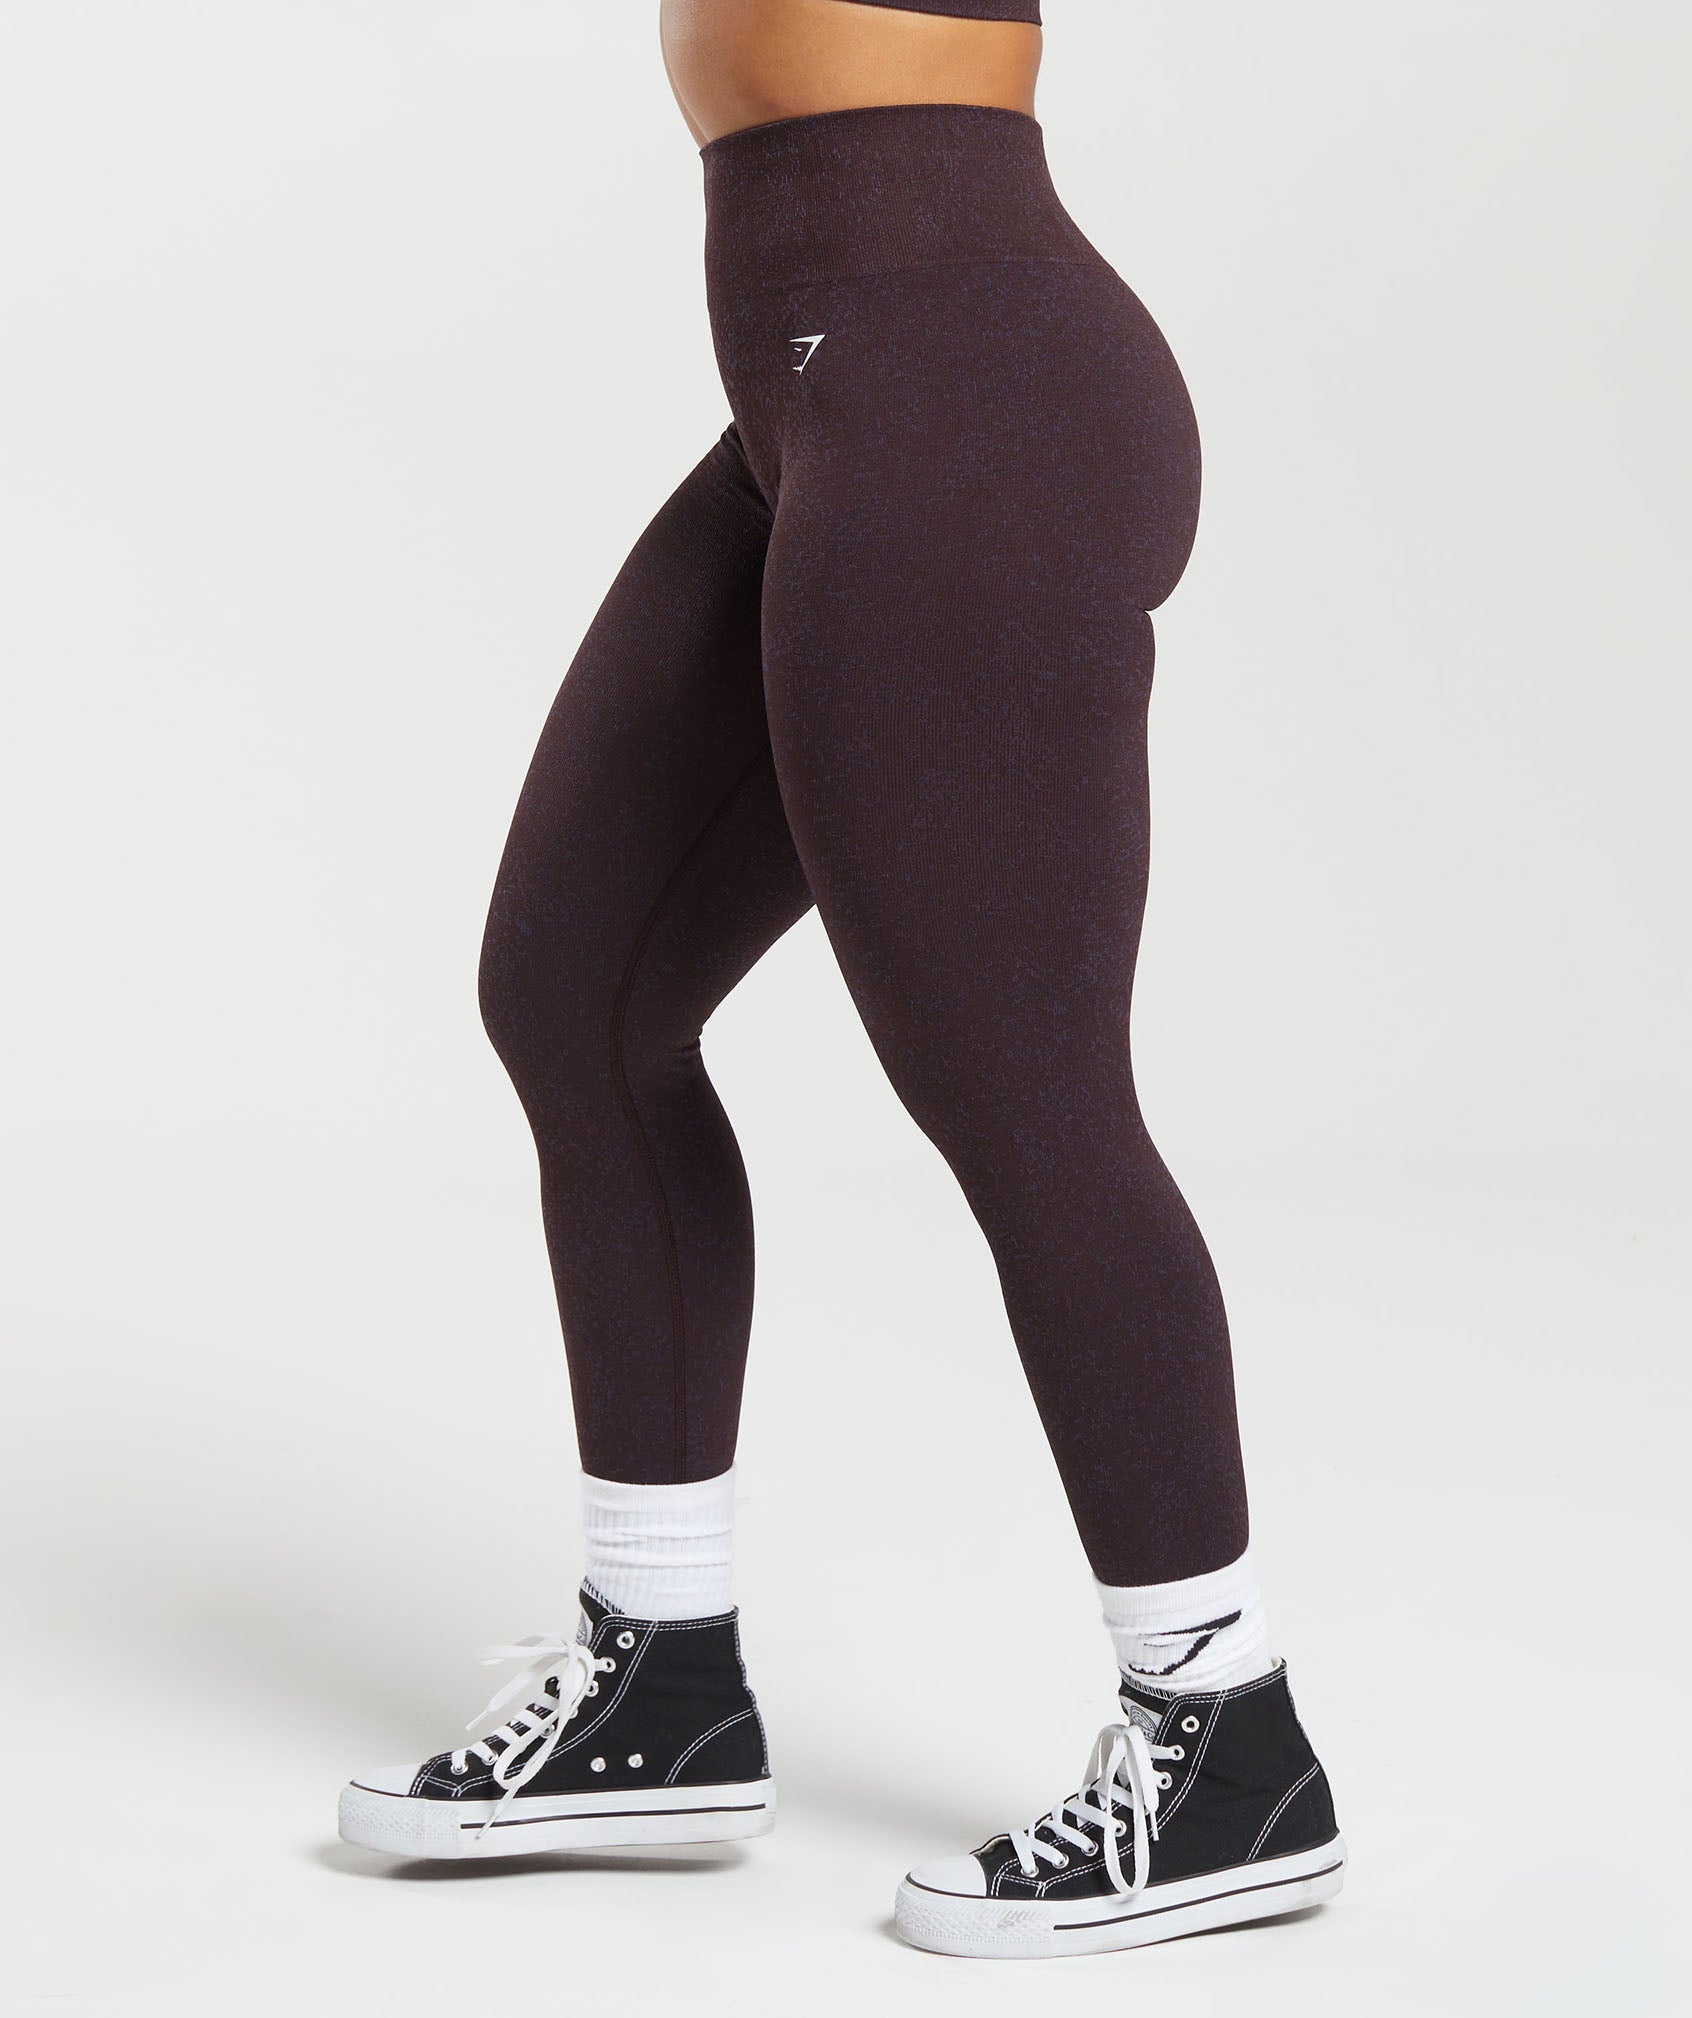 Gymshark Adapt Marl Seamless Leggings Light Purple Womens XS EUC